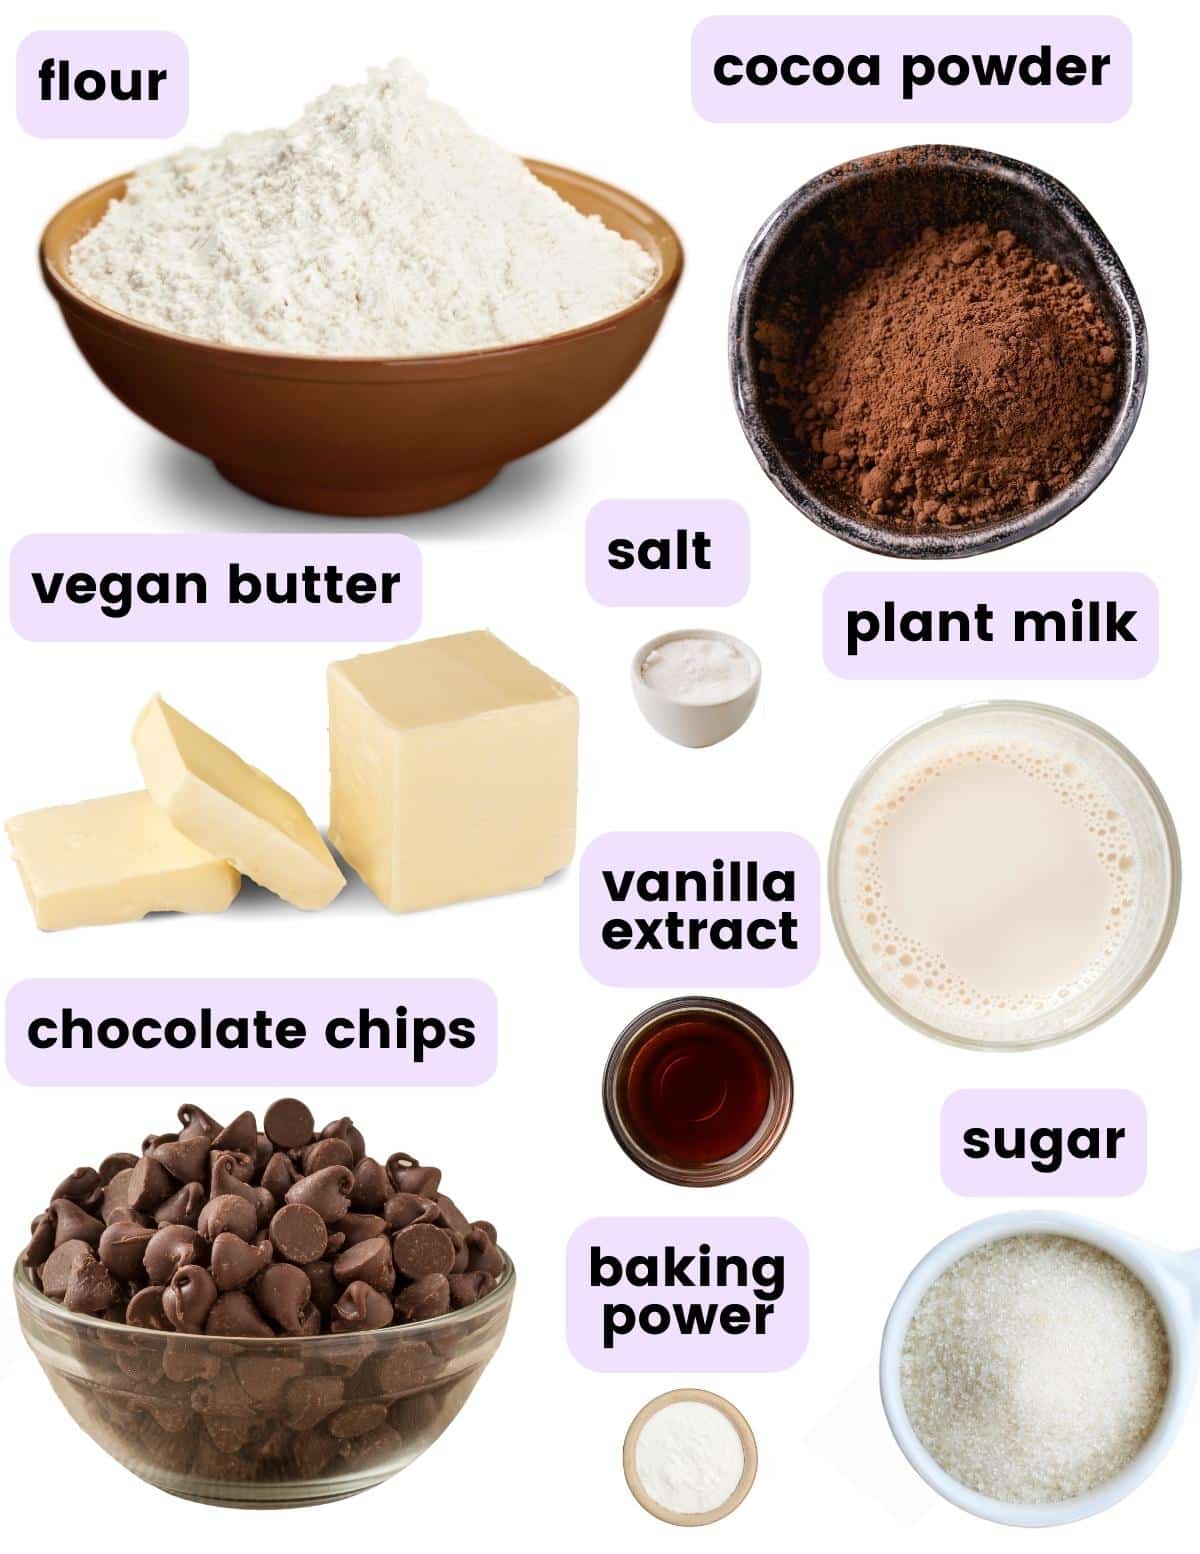 flour, cocoa powder, salt, vegan butter, vanilla, plant milk, sugar, chocolate chips, baking powder.